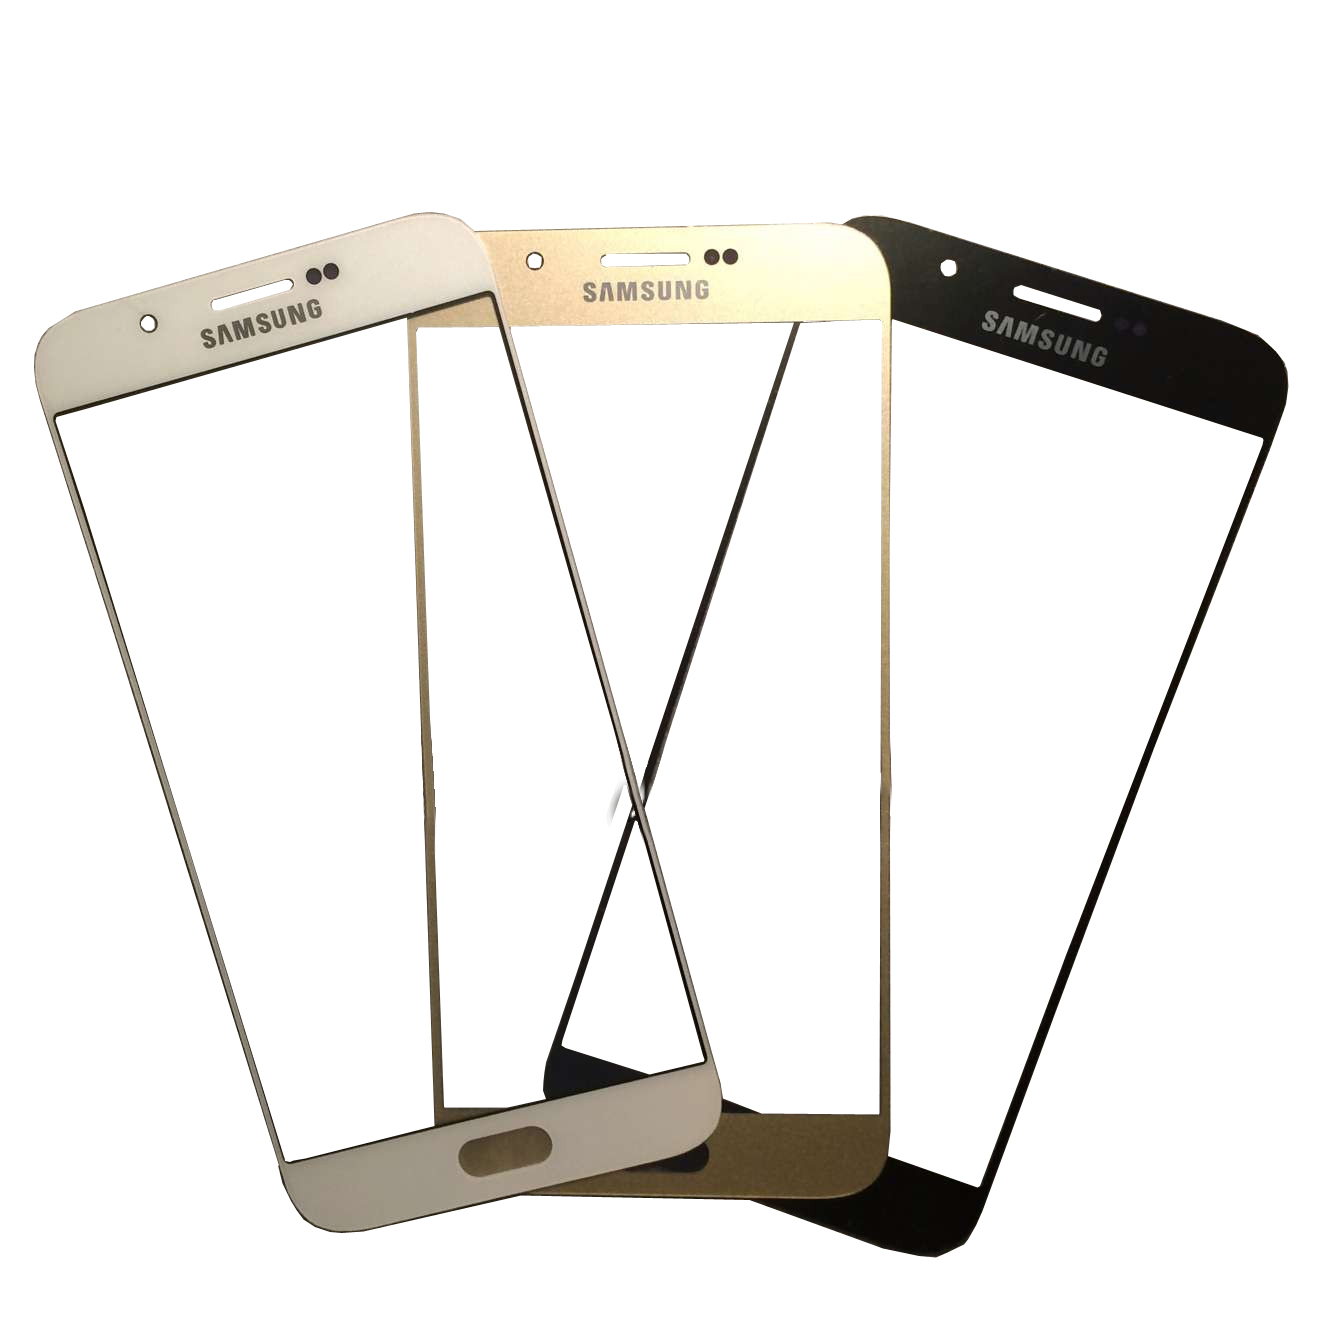 Thay kính Samsung A8 Gold - Black - White